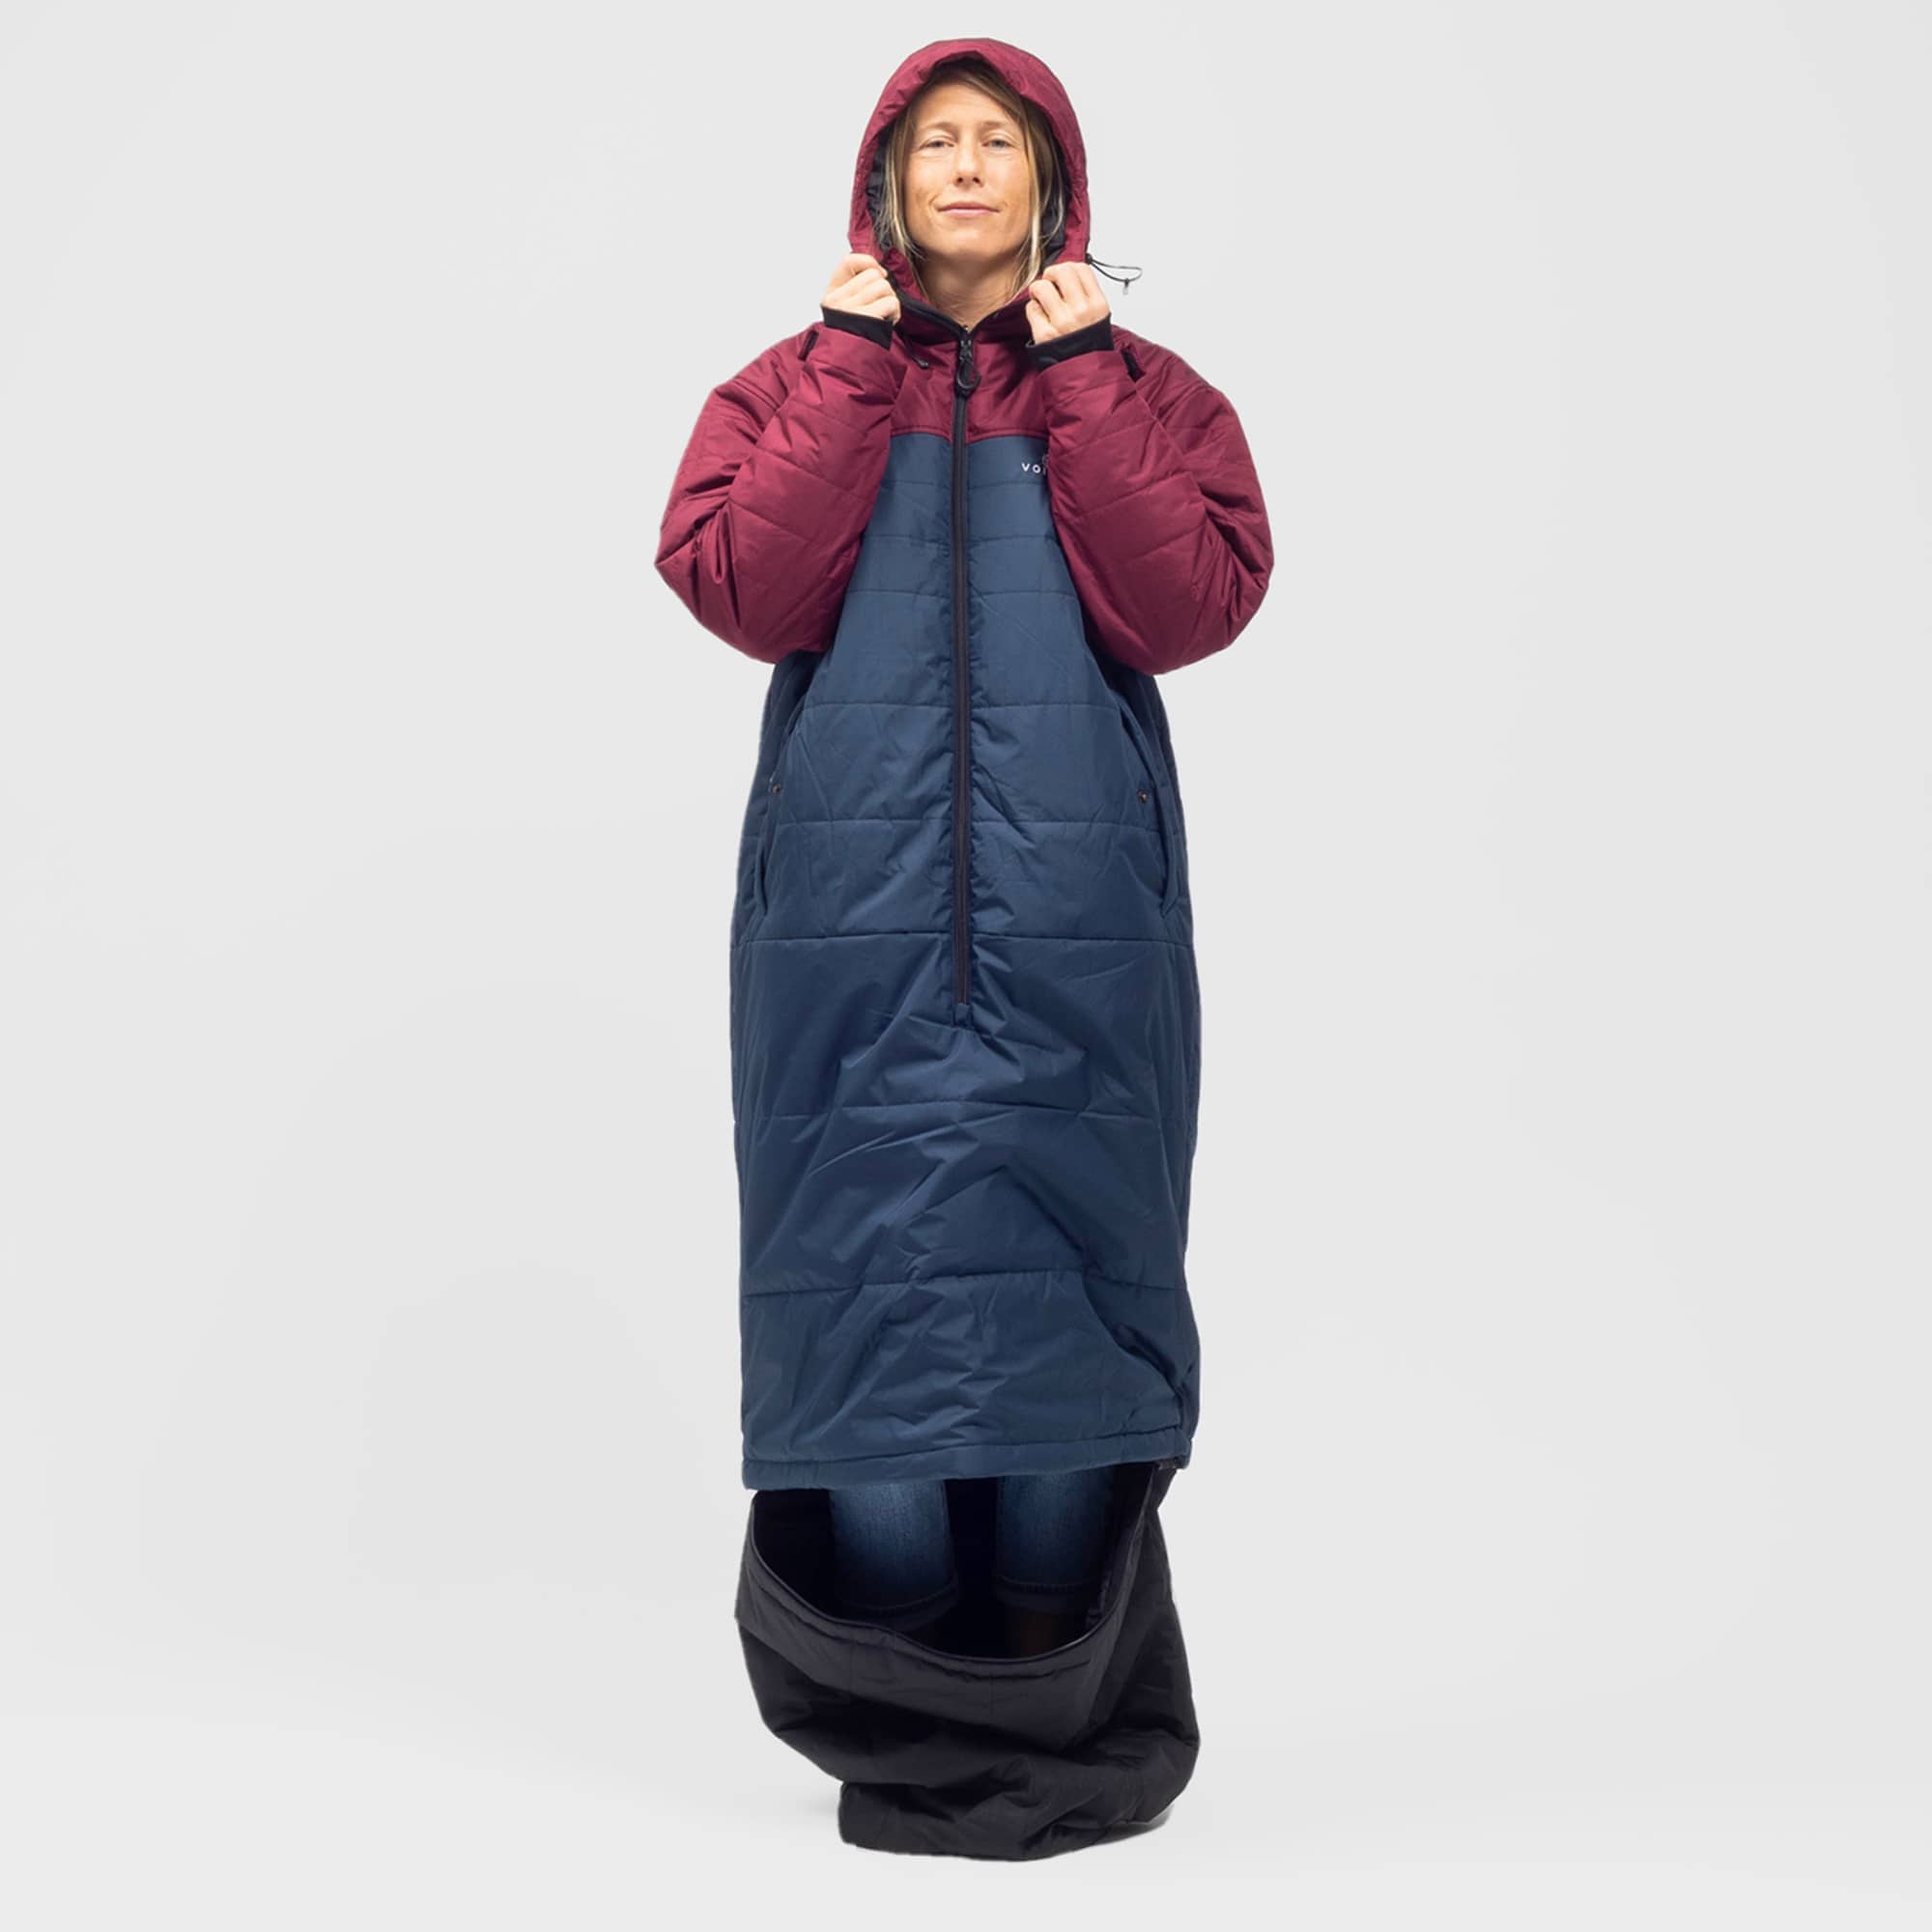 VOITED Premium Slumber Jacket for Camping, Vanlife & Indoor - Cardinal / Navy / Black